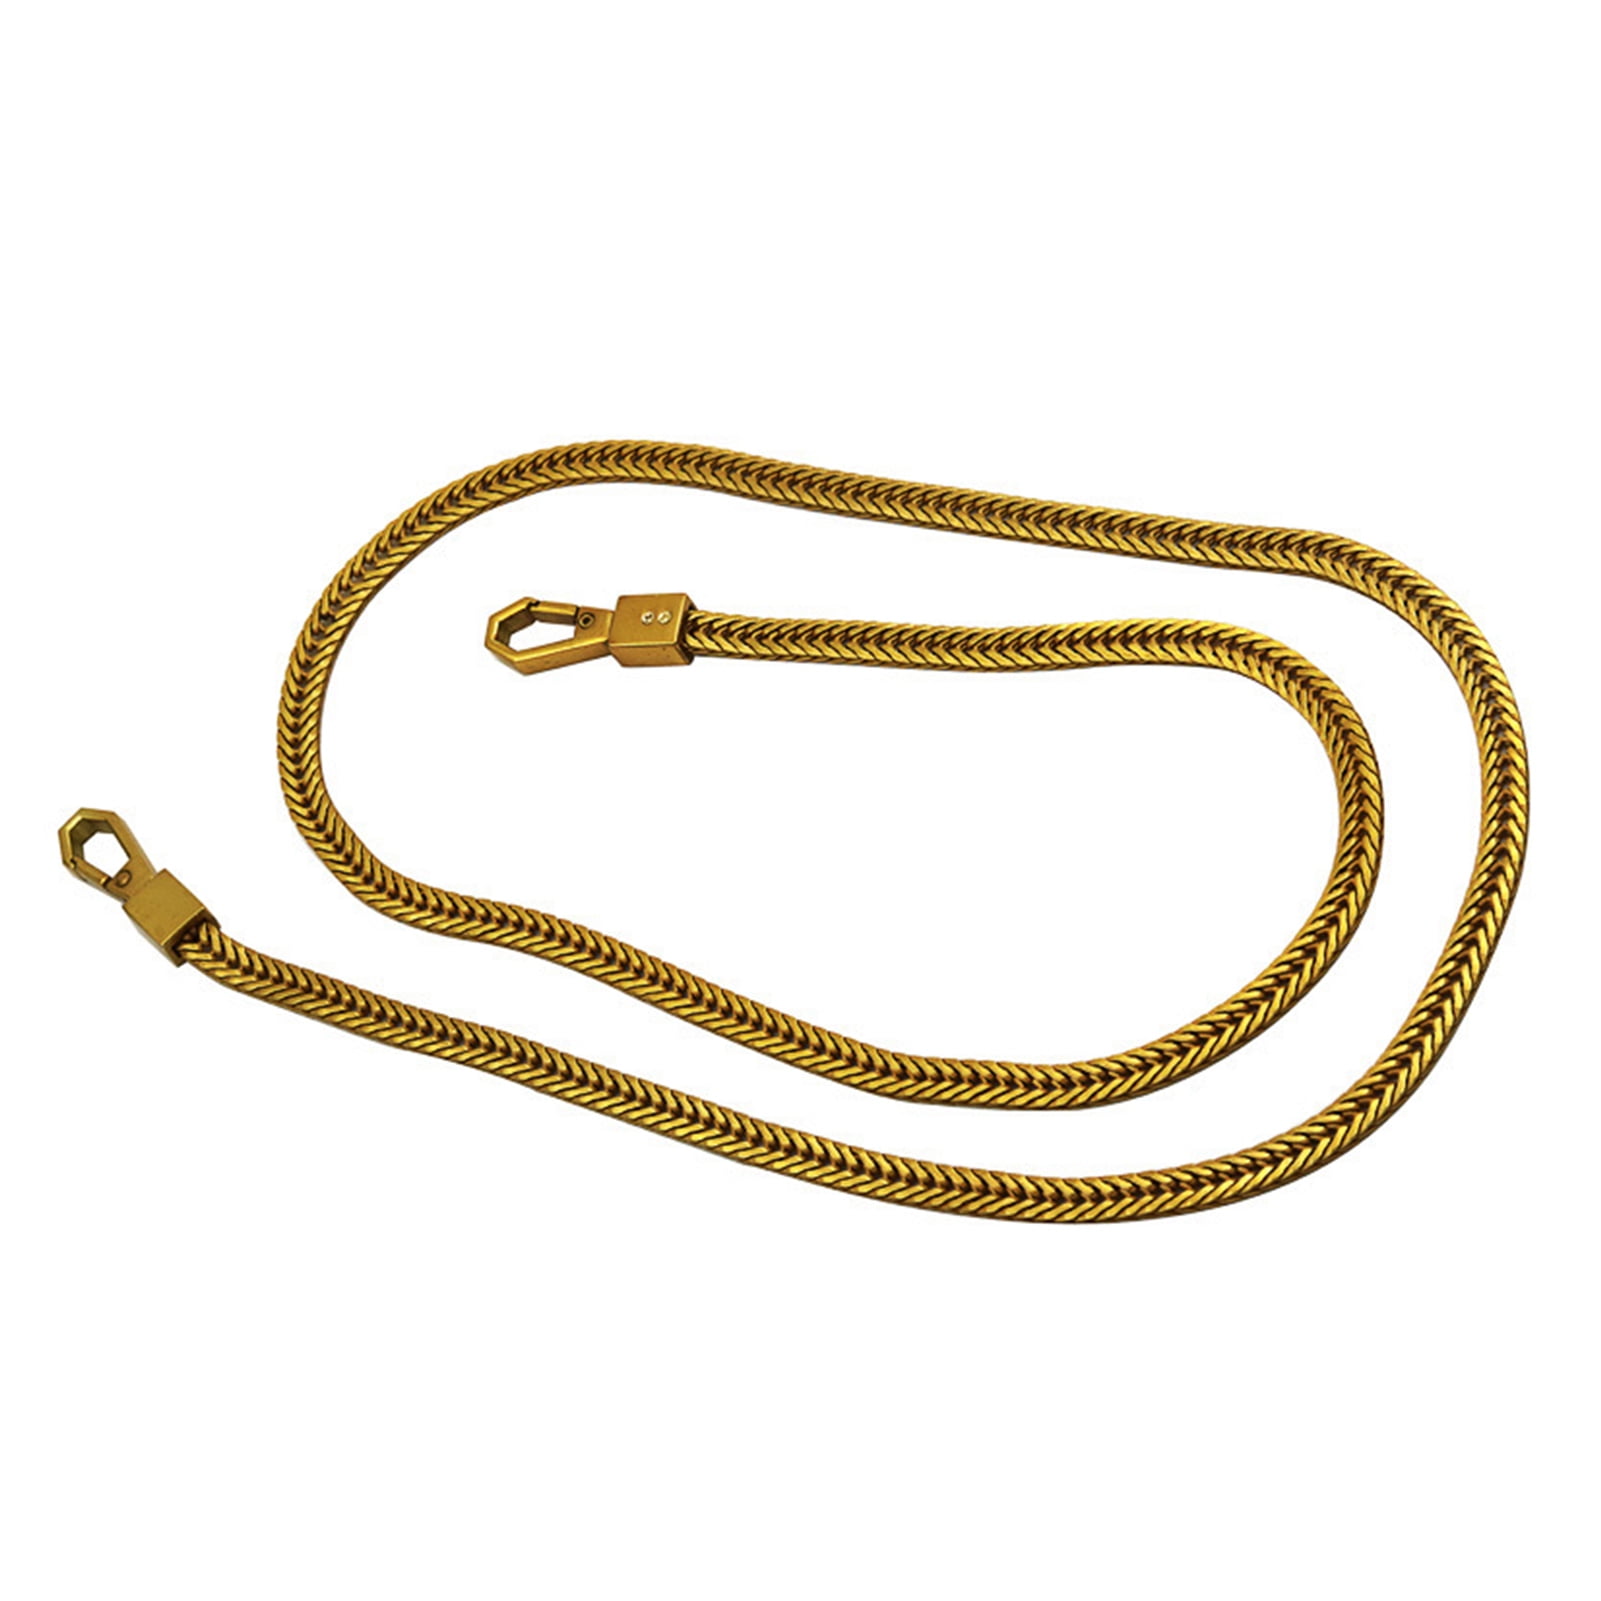 Rygai Bag Shoulder Strap Long Snap Hook Clip Black/Golden/Silver Metal Bag Accessories Crossbody Bag Handbag Snake Bone Chain for Daily,Antique Gold